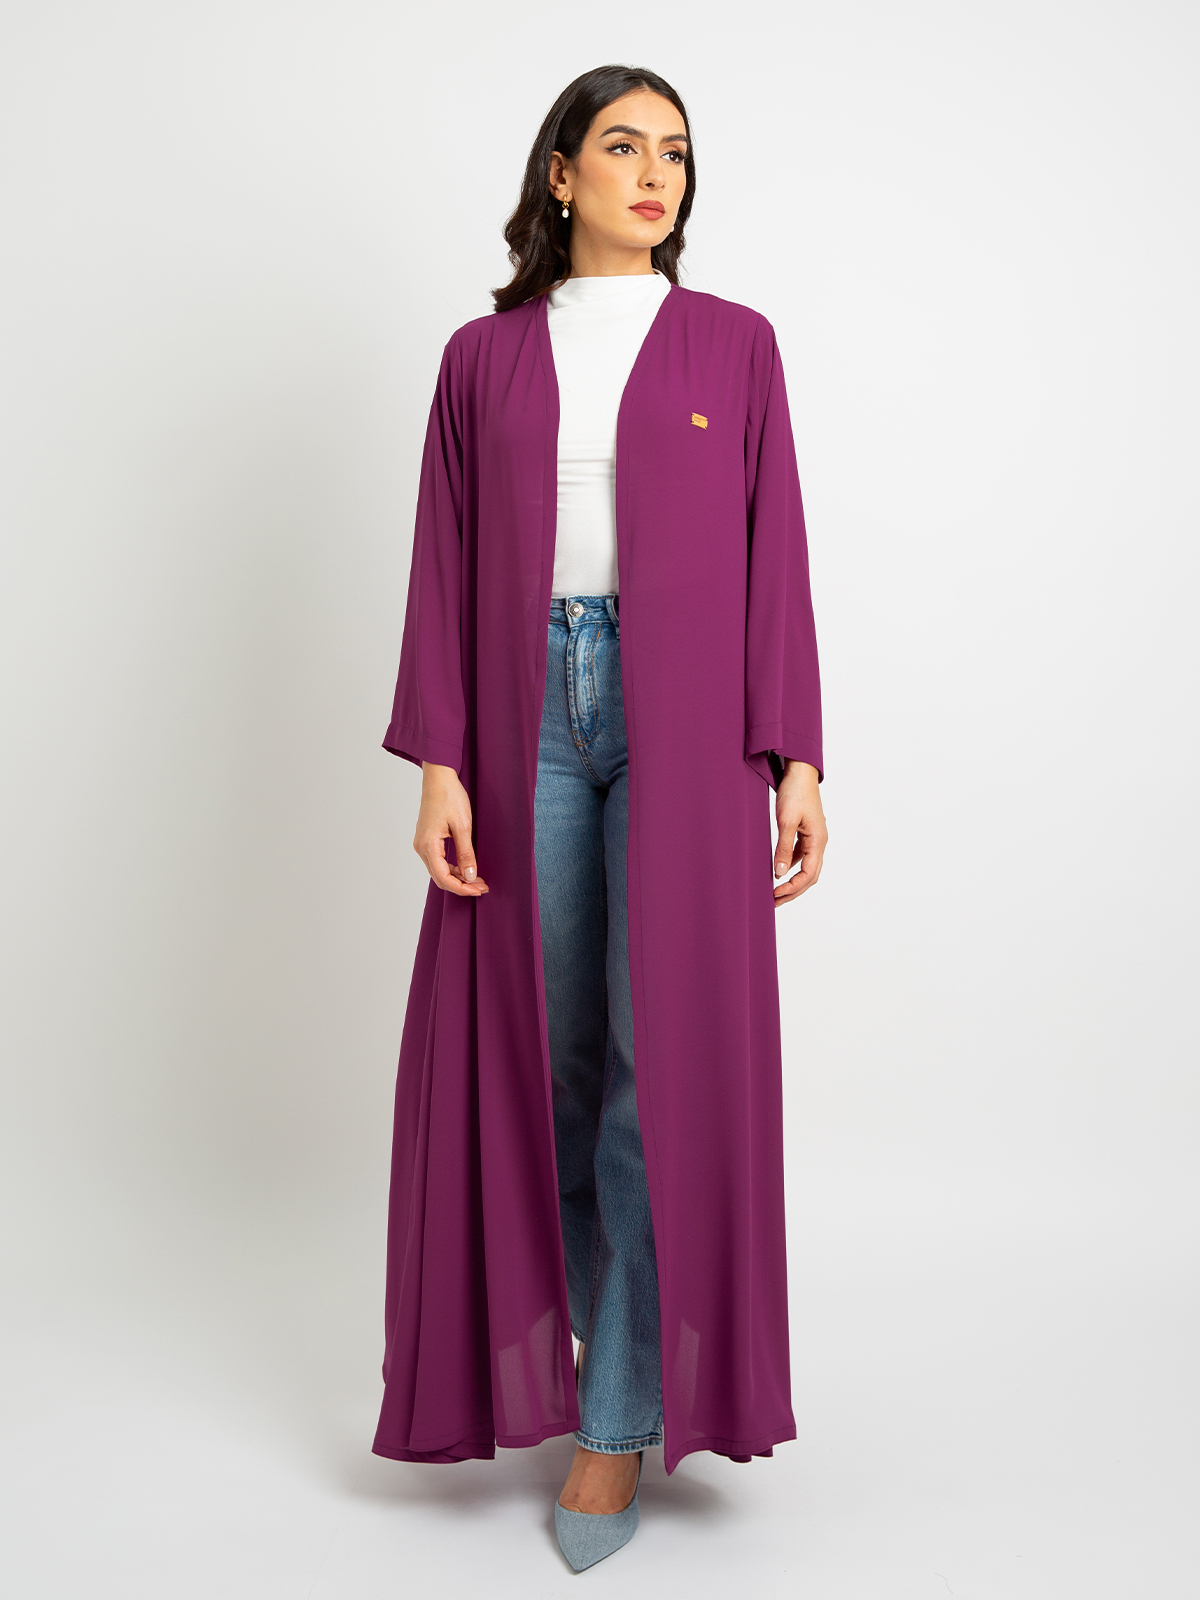 Magenta - A Cut Long Open Half Cloche Abaya in Light Fabric